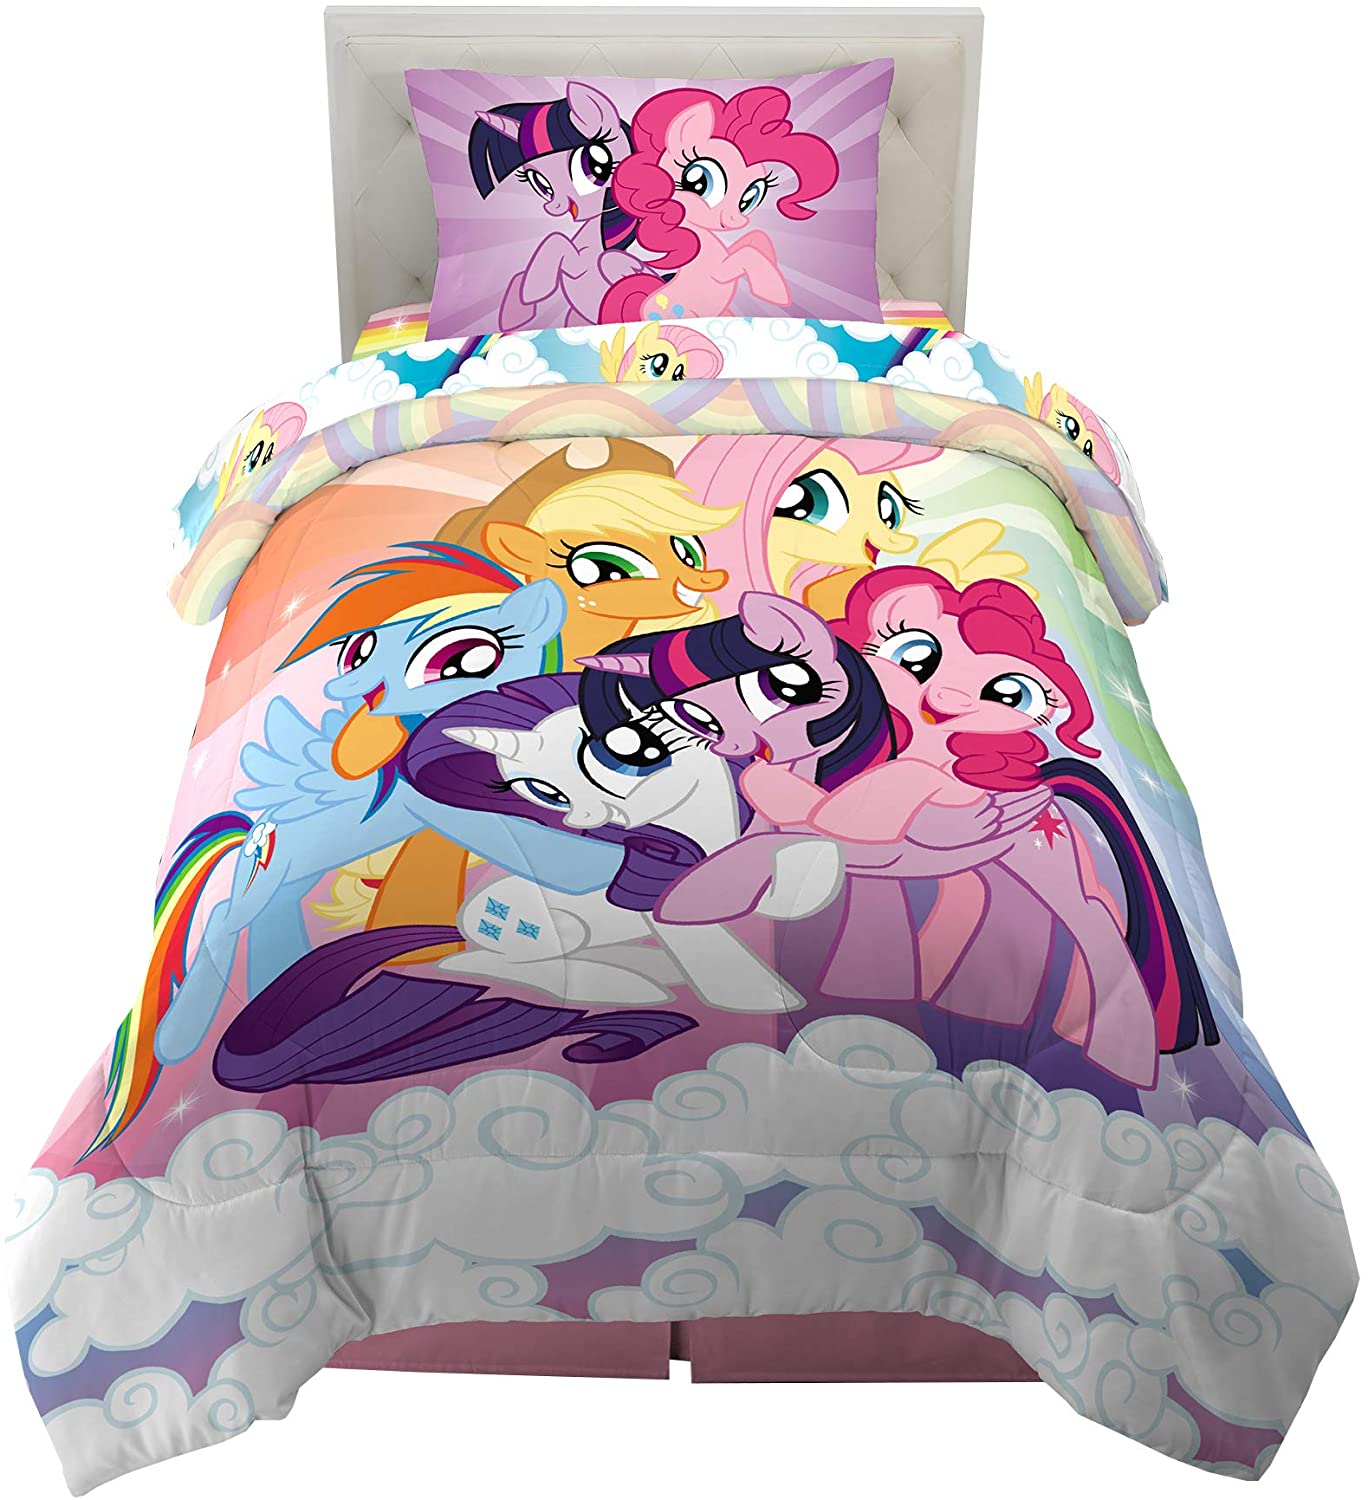 Franco Kids Bedding Super Soft Comforter and Sheet Set Sonic 5 Piece Full Size 